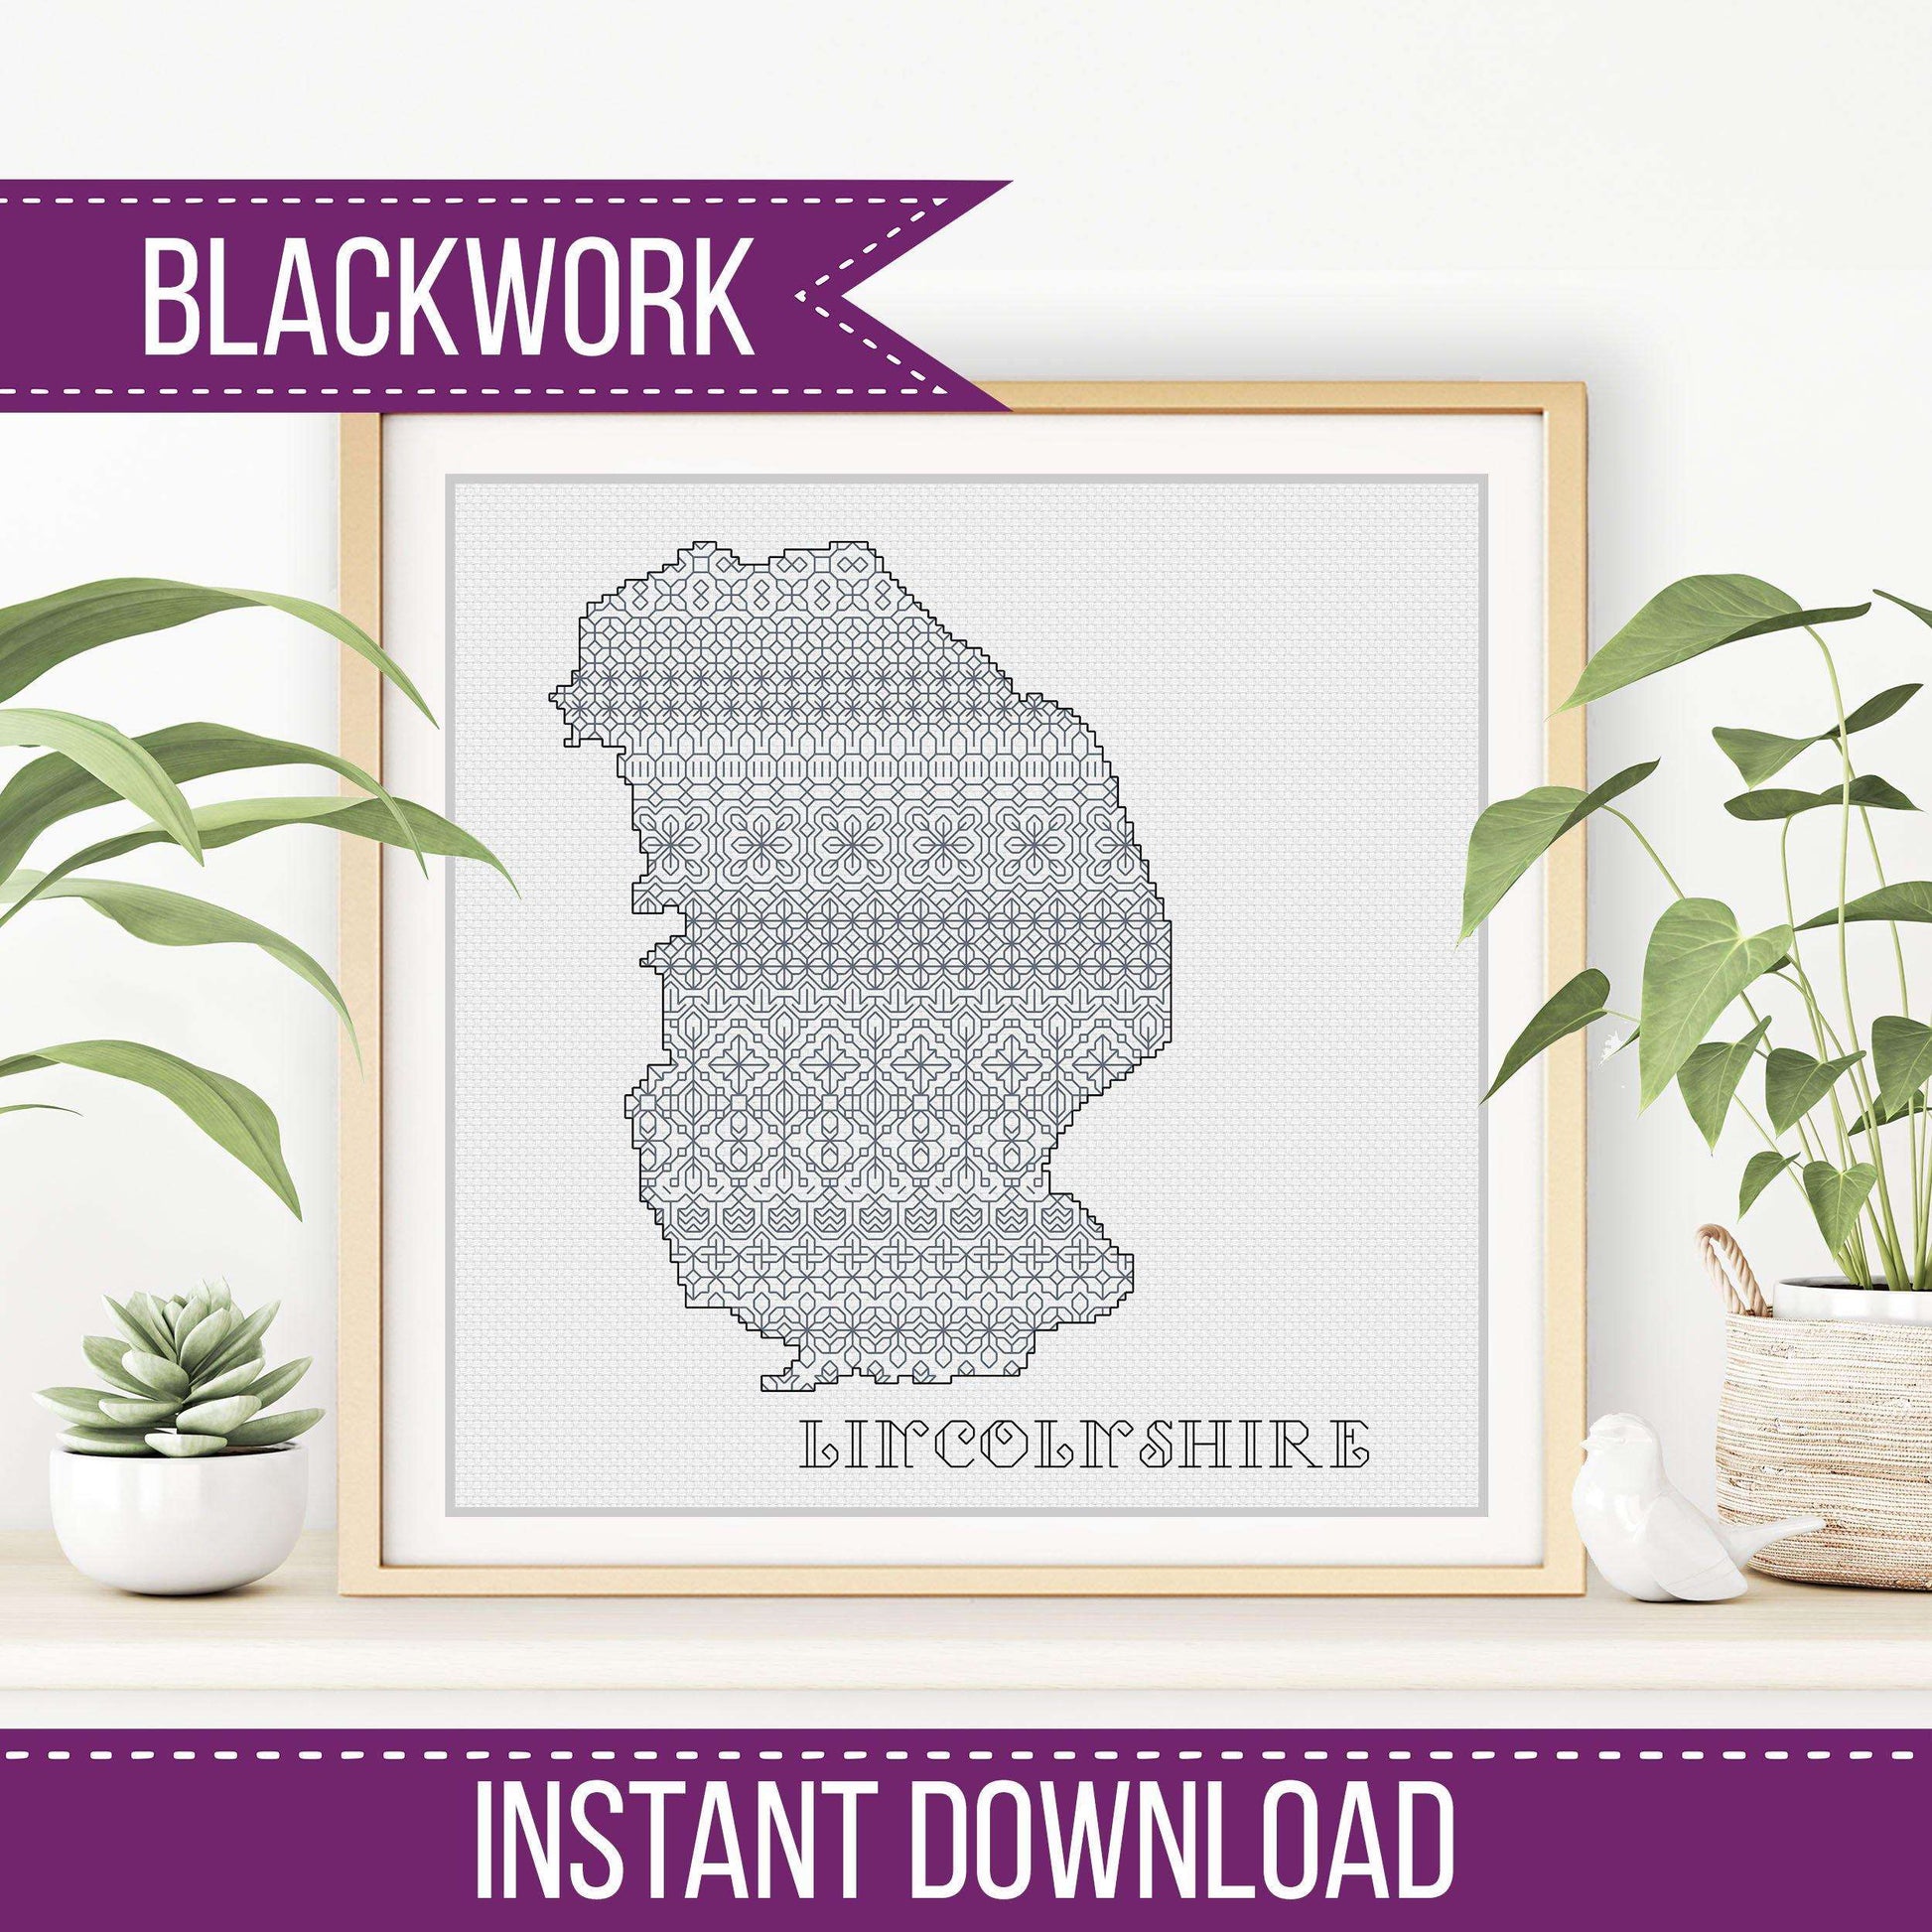 Lincolnshire Blackwork - Blackwork Patterns & Cross Stitch by Peppermint Purple